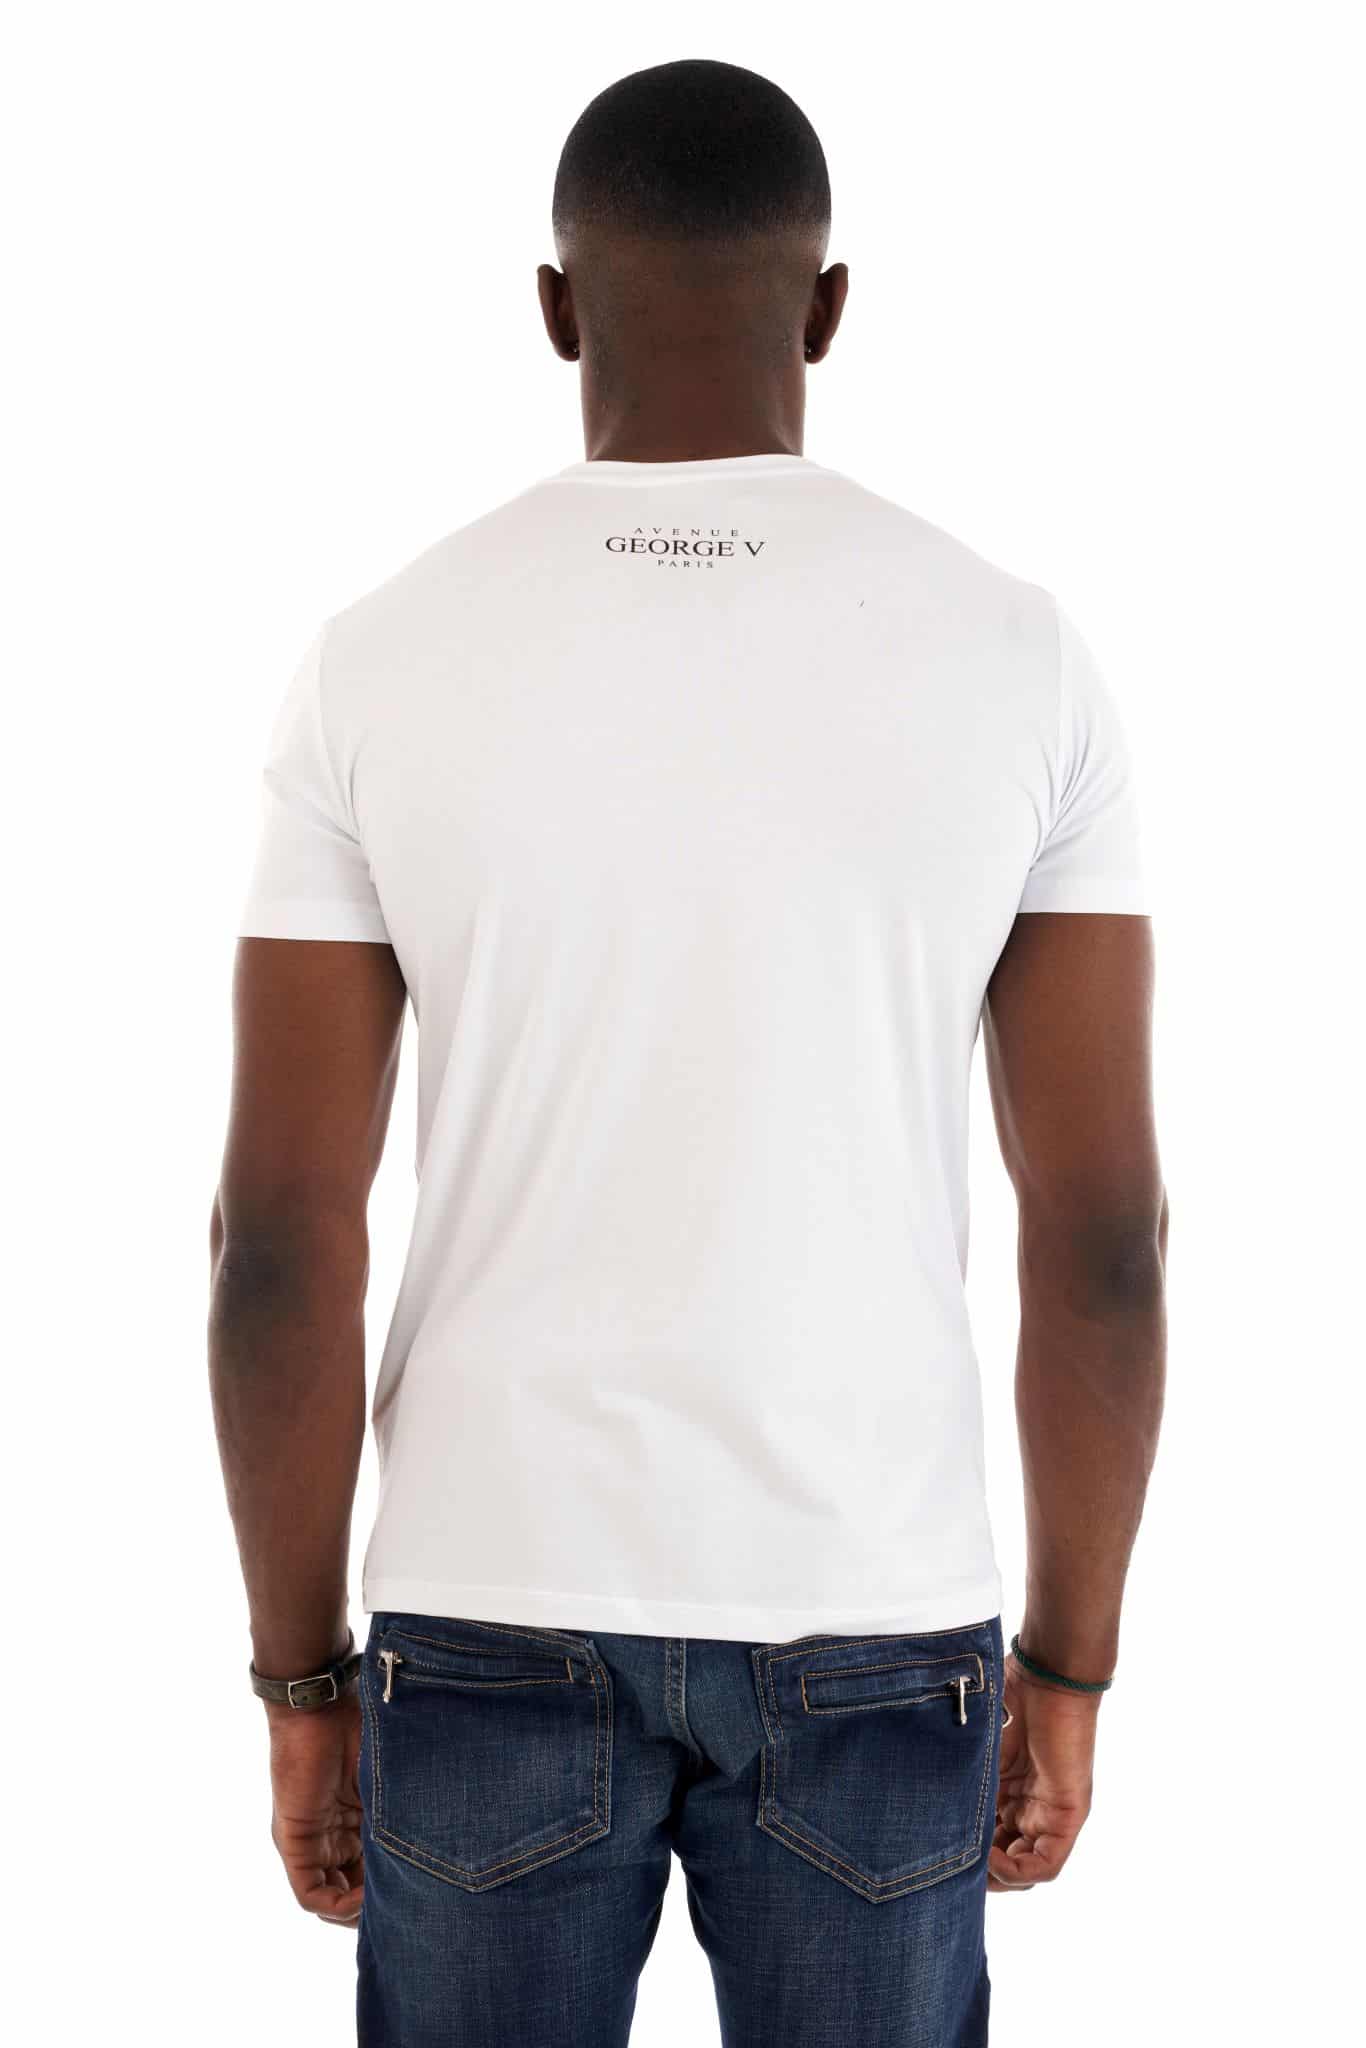 Camiseta GEORGE V - GV10059 WHITE